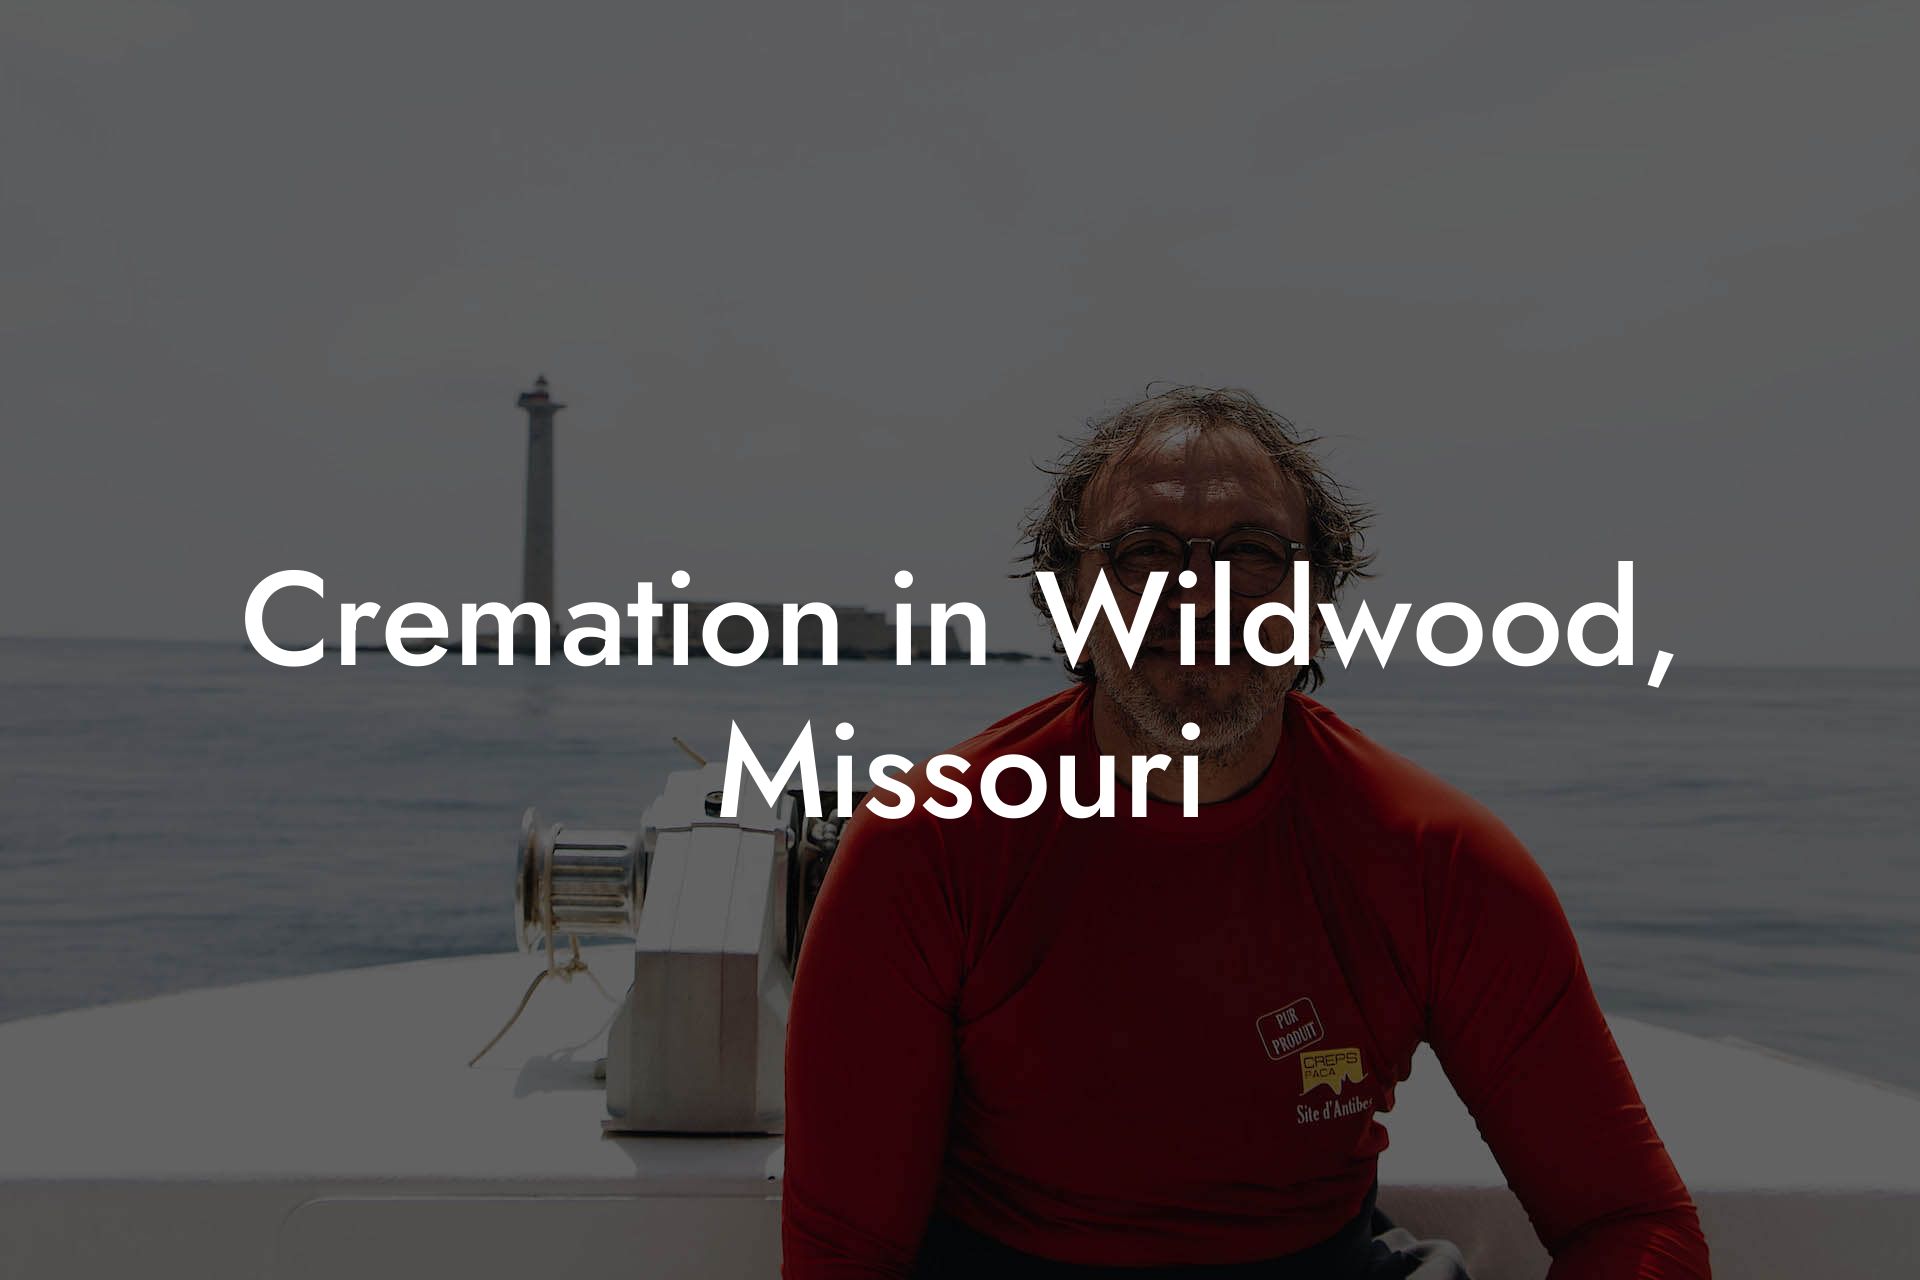 Cremation in Wildwood, Missouri